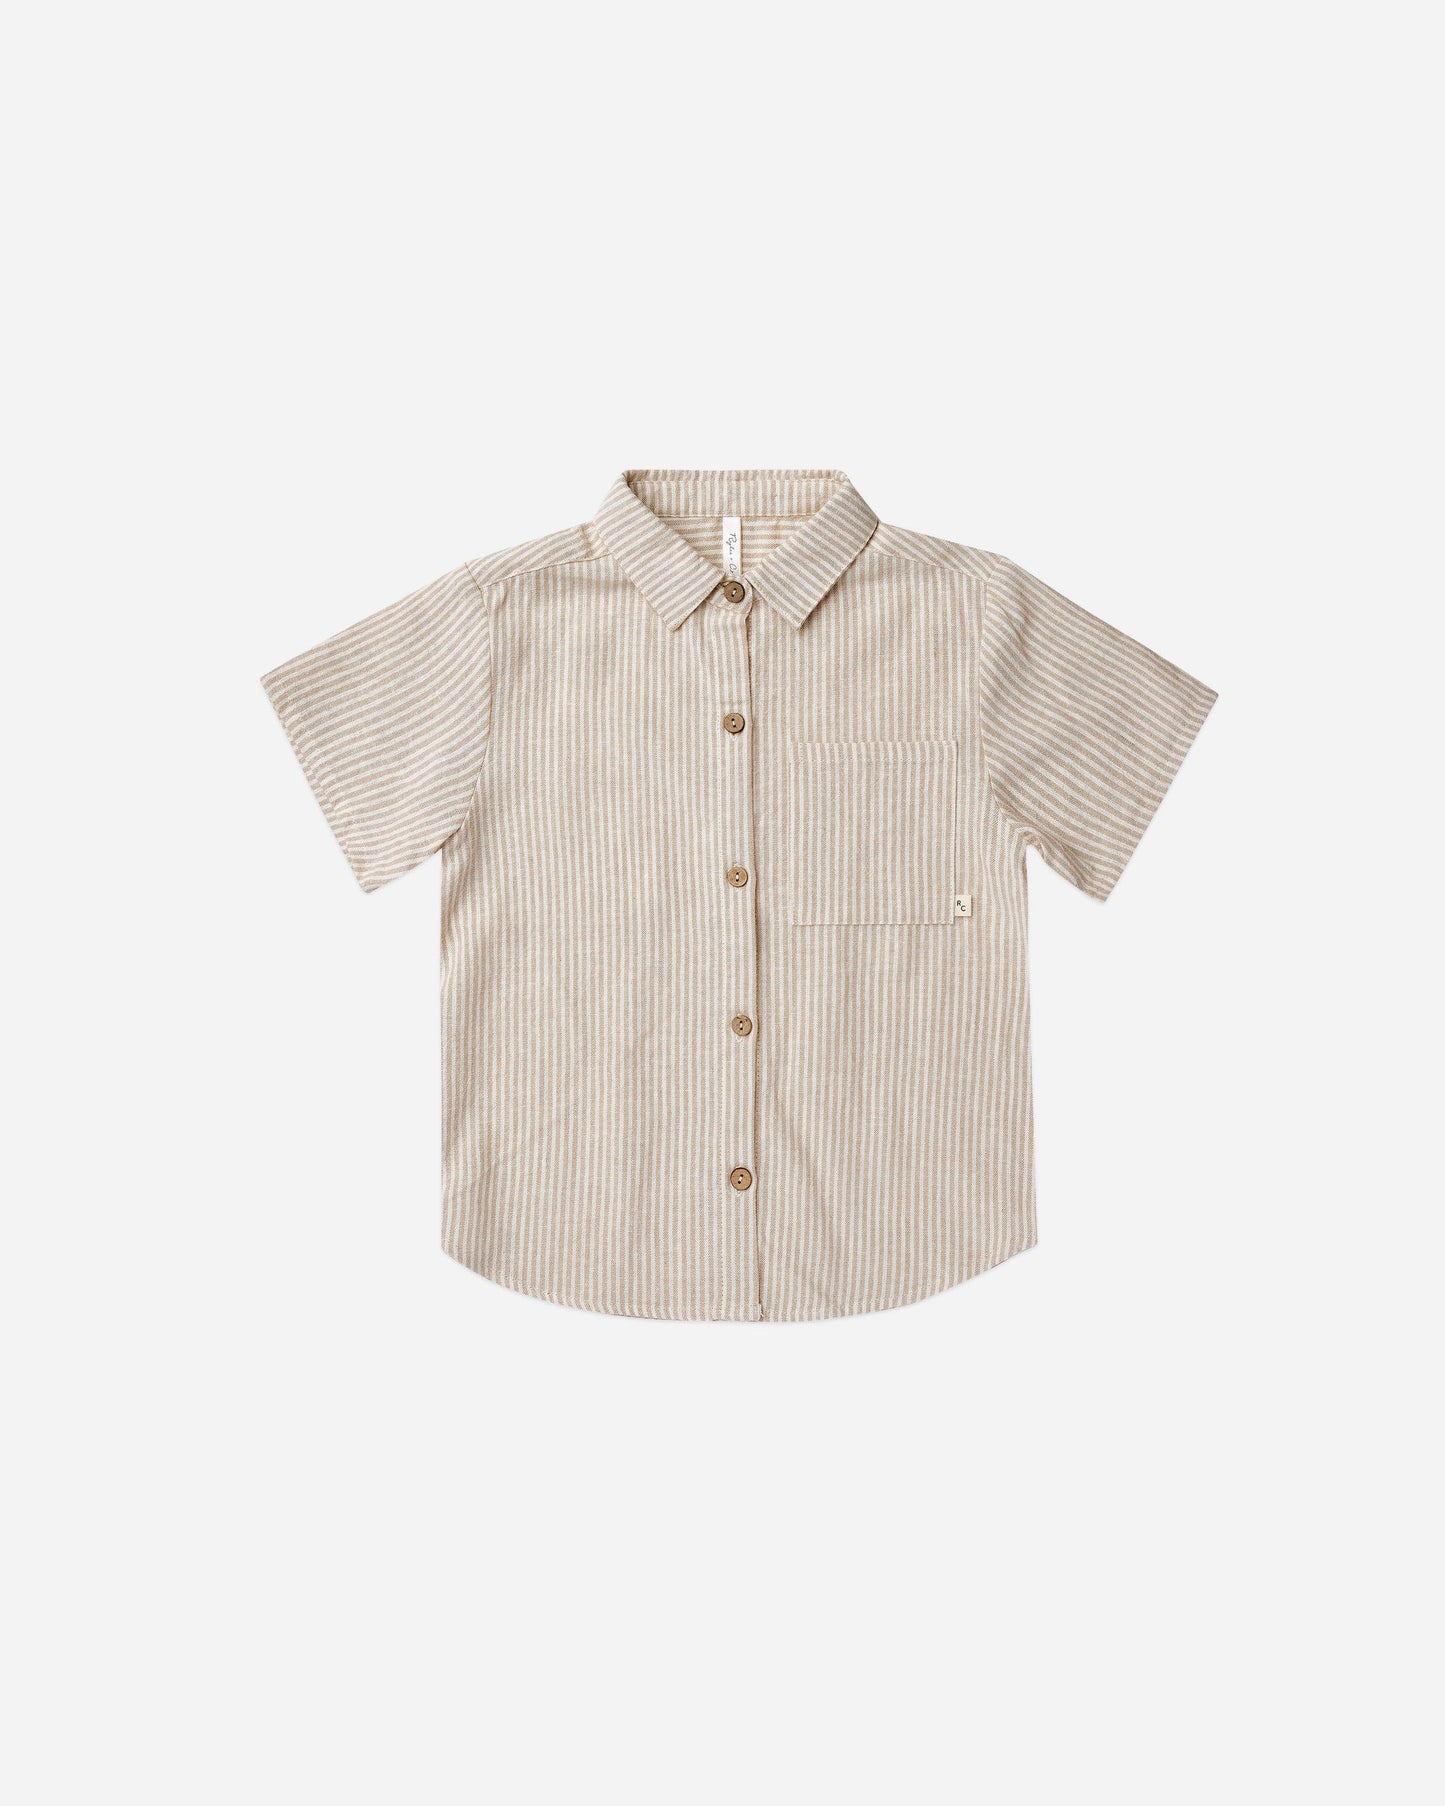 Collared short sleeve shirt || sand stripe